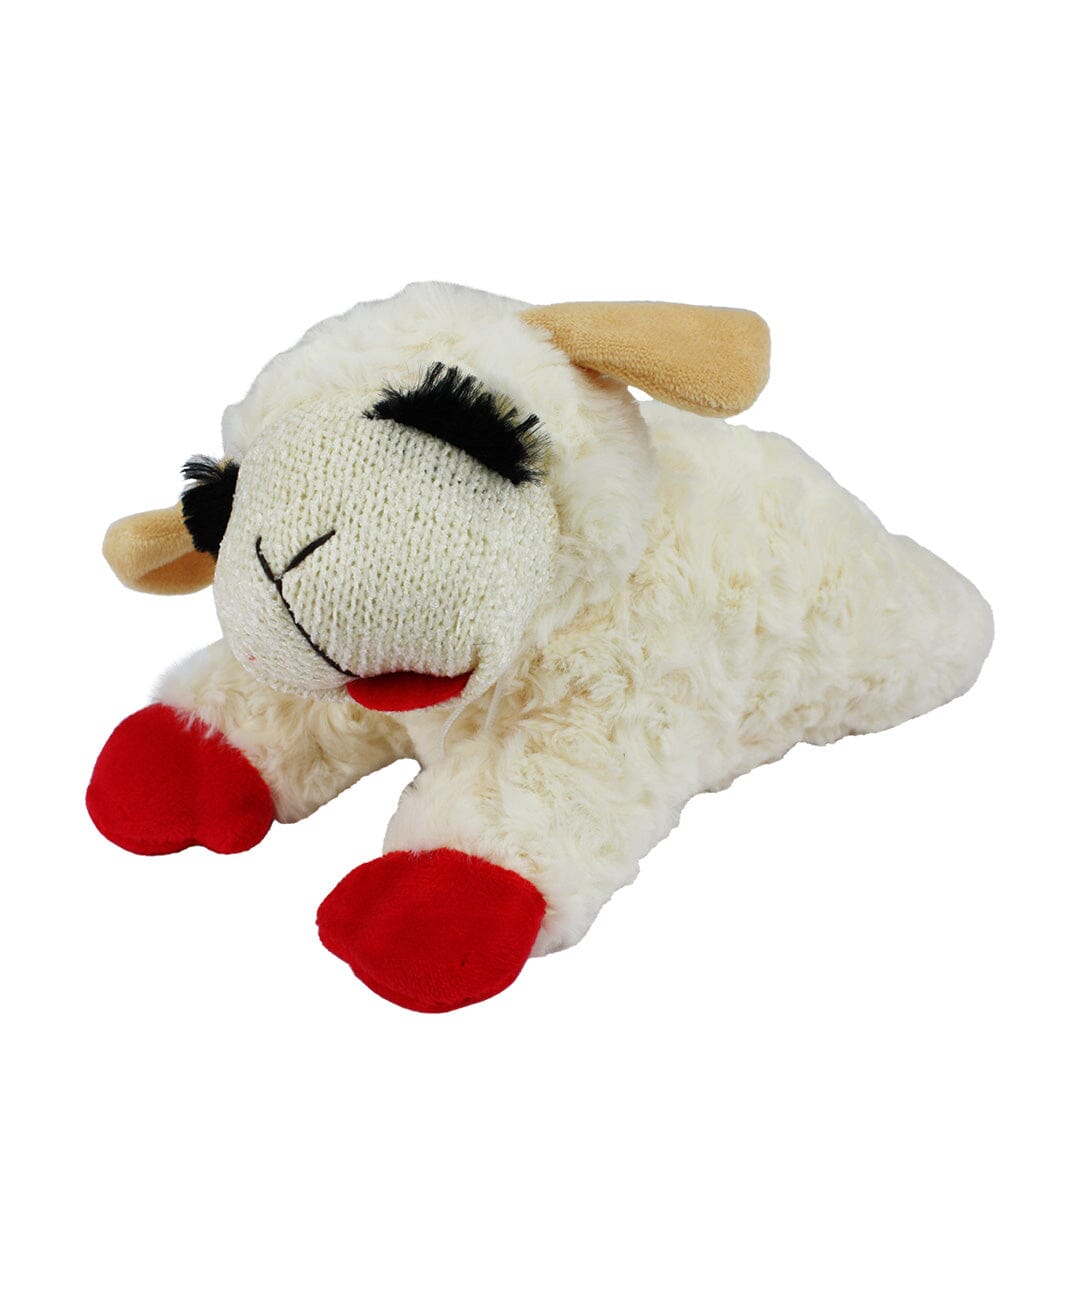 plush white  lamb chop dog toy 10.5 inches long 